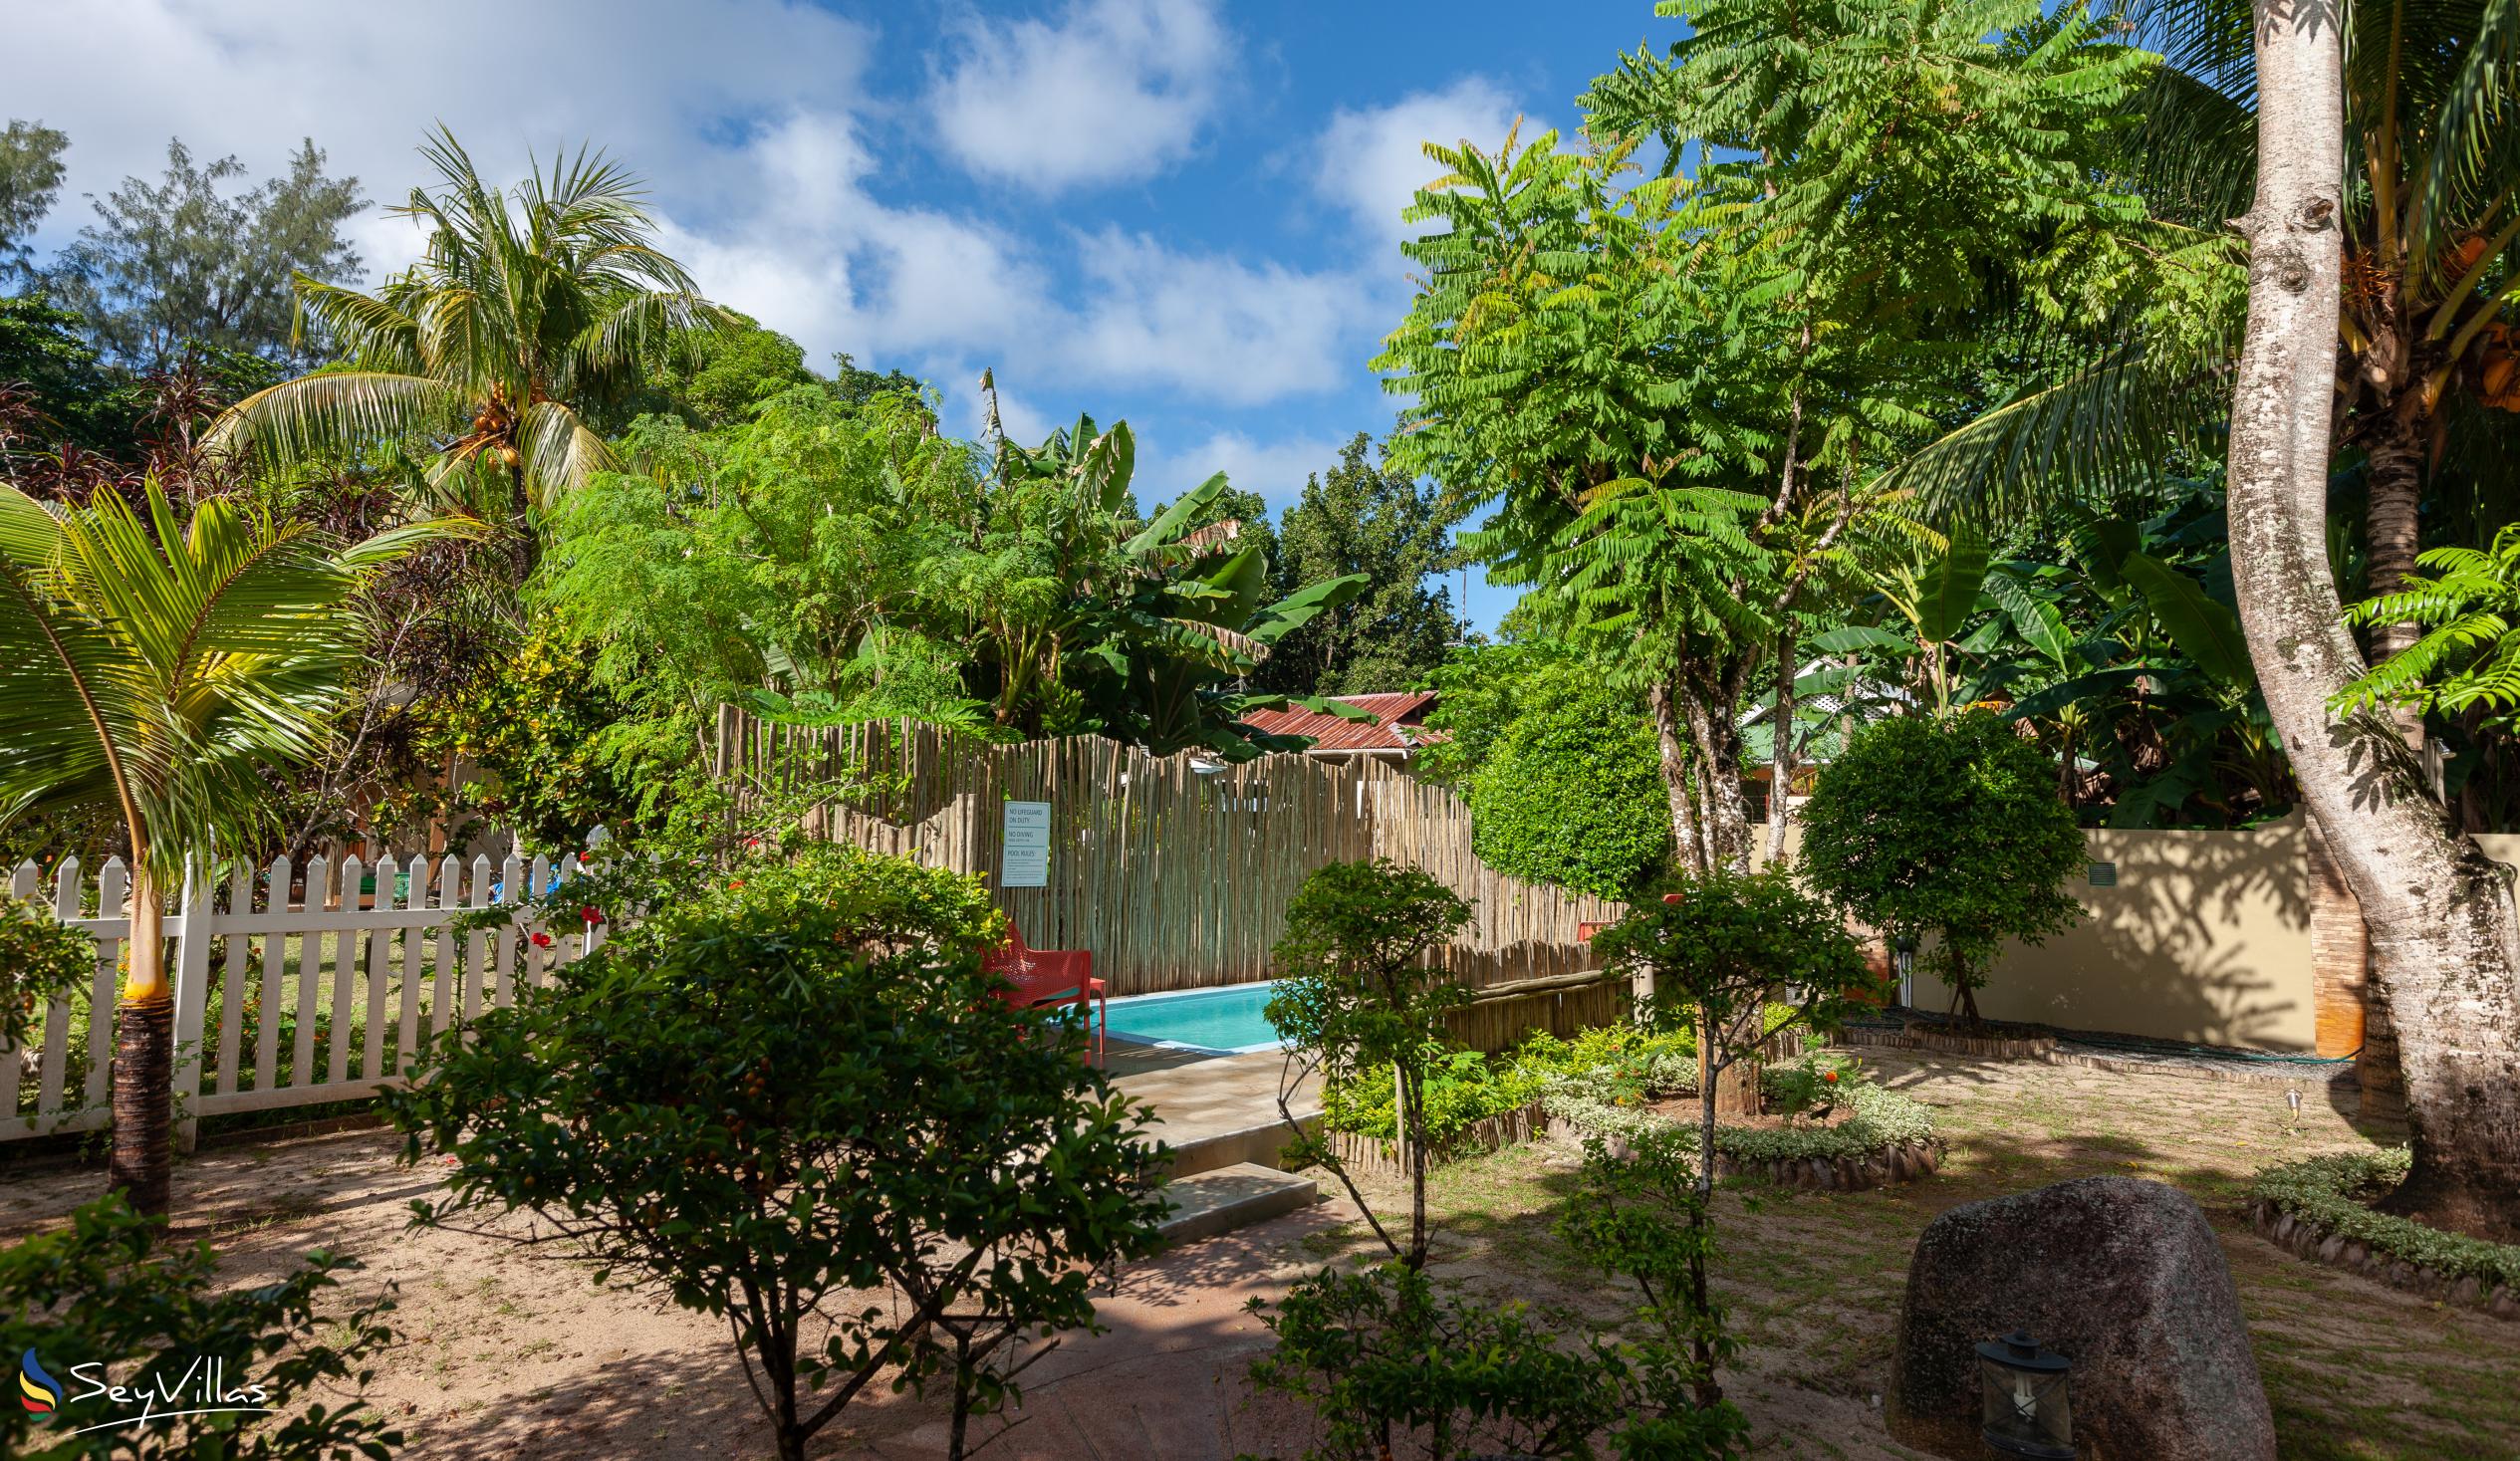 Foto 82: Casa de Leela - Luxus-Bungalow mit 2 Schlafzimmern und privatem Pool - La Digue (Seychellen)